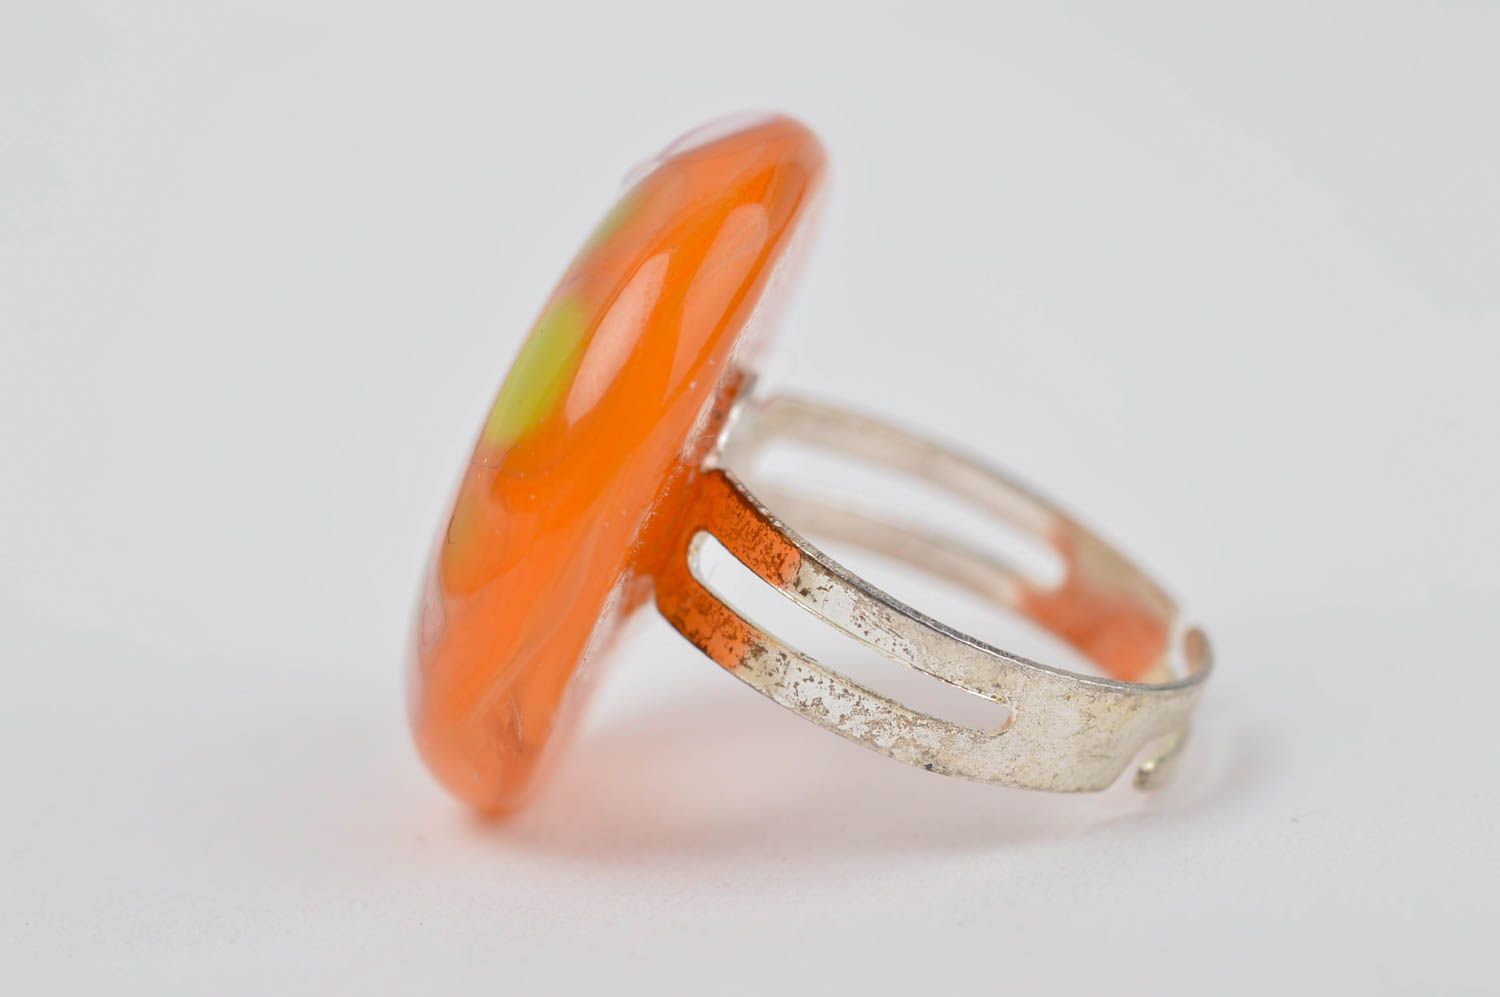 Beautiful handmade glass ring artisan jewelry designs fused glass ring photo 2